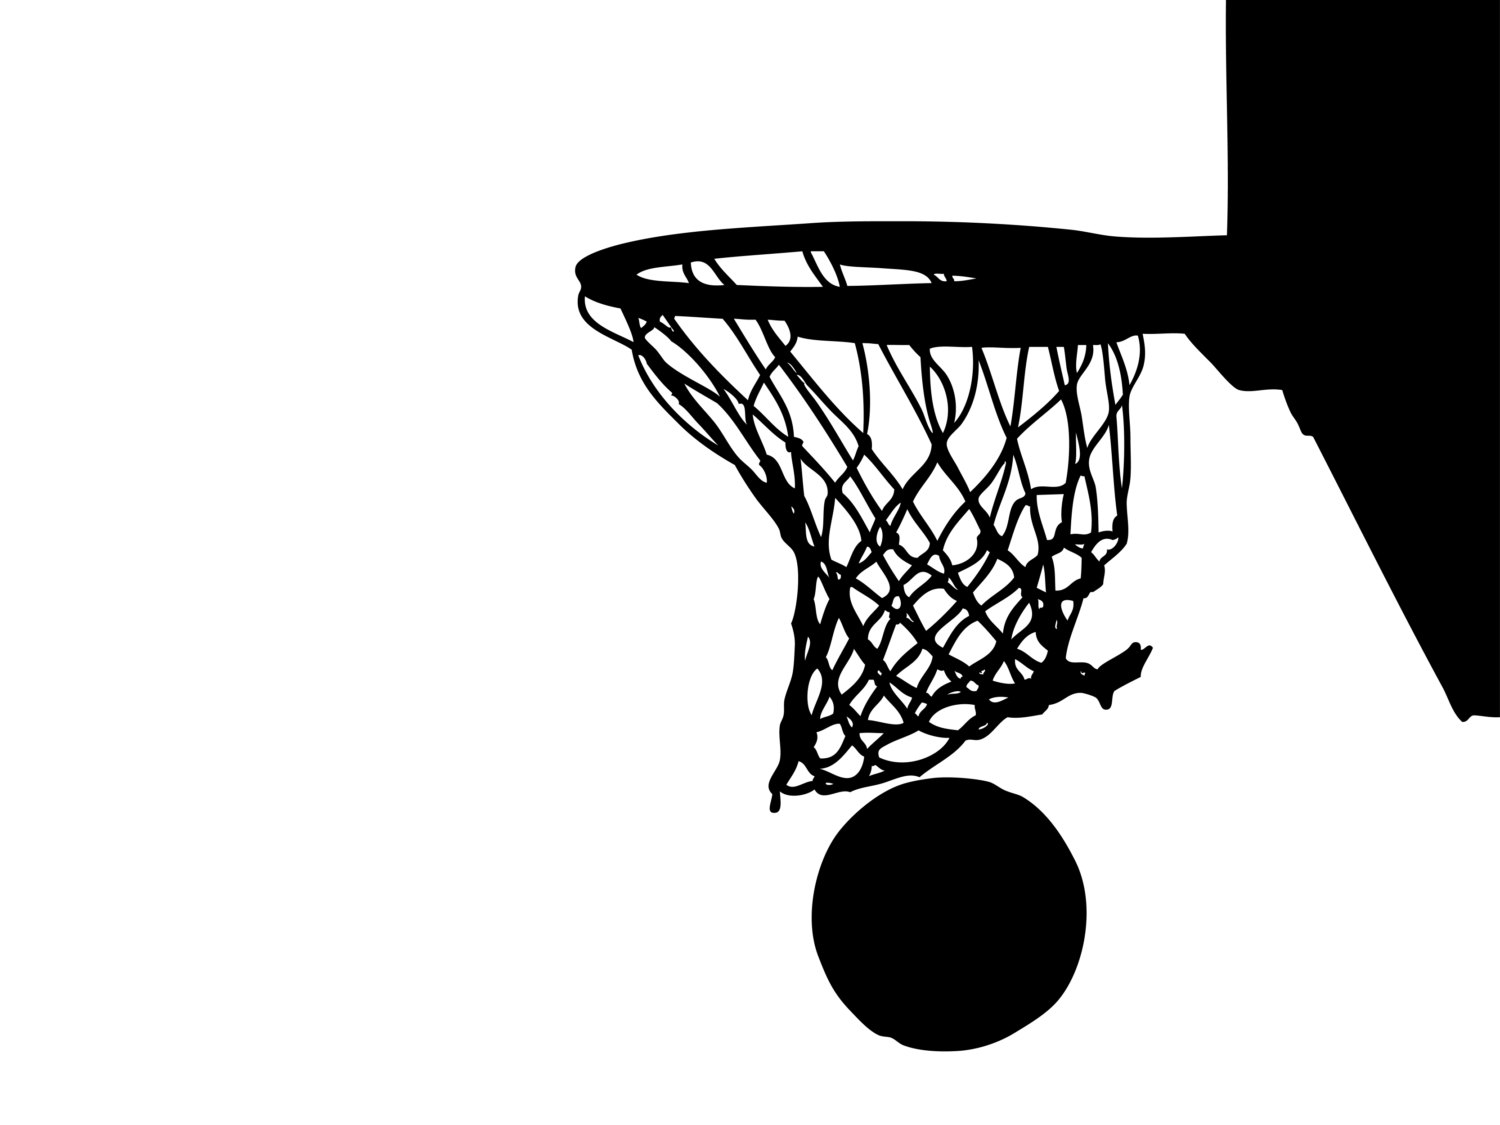 basketball going into hoop ve